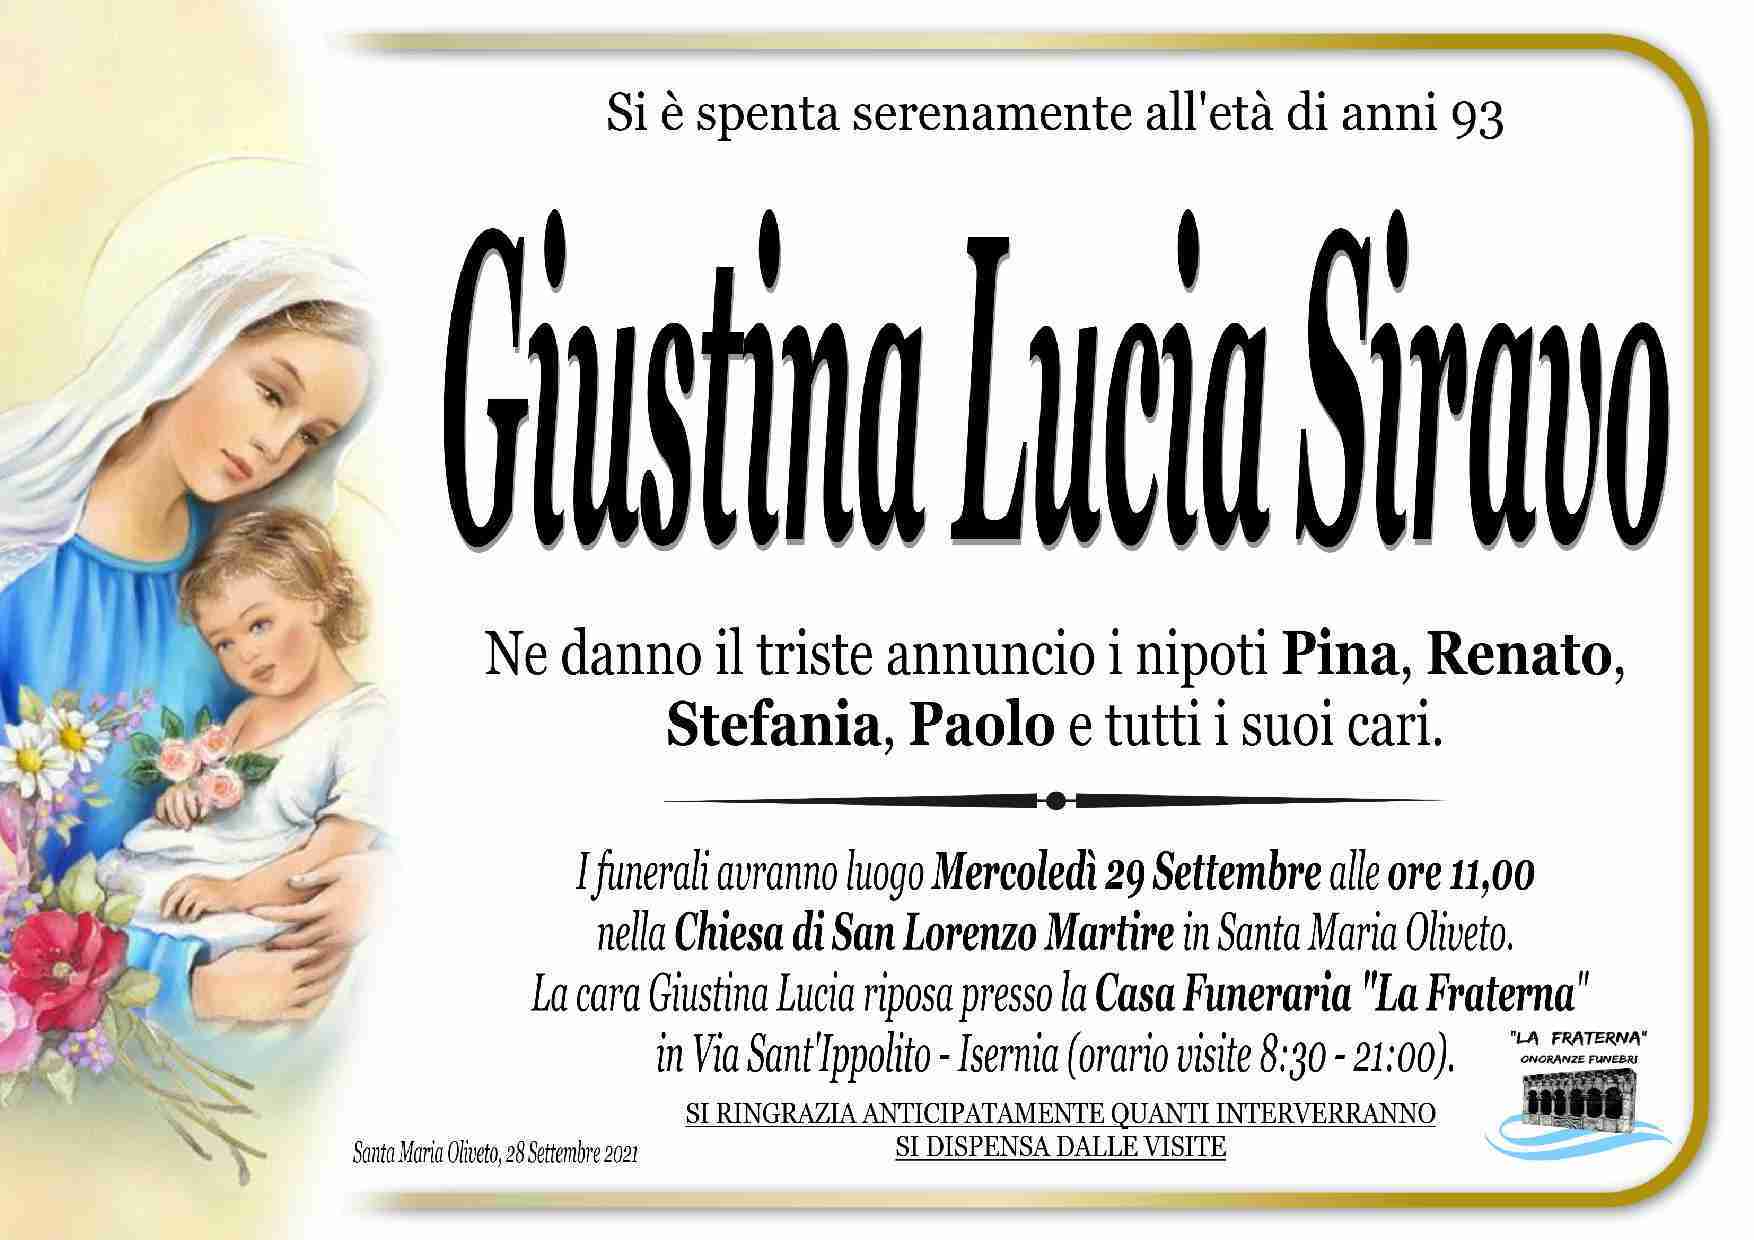 Giustina Lucia Siravo